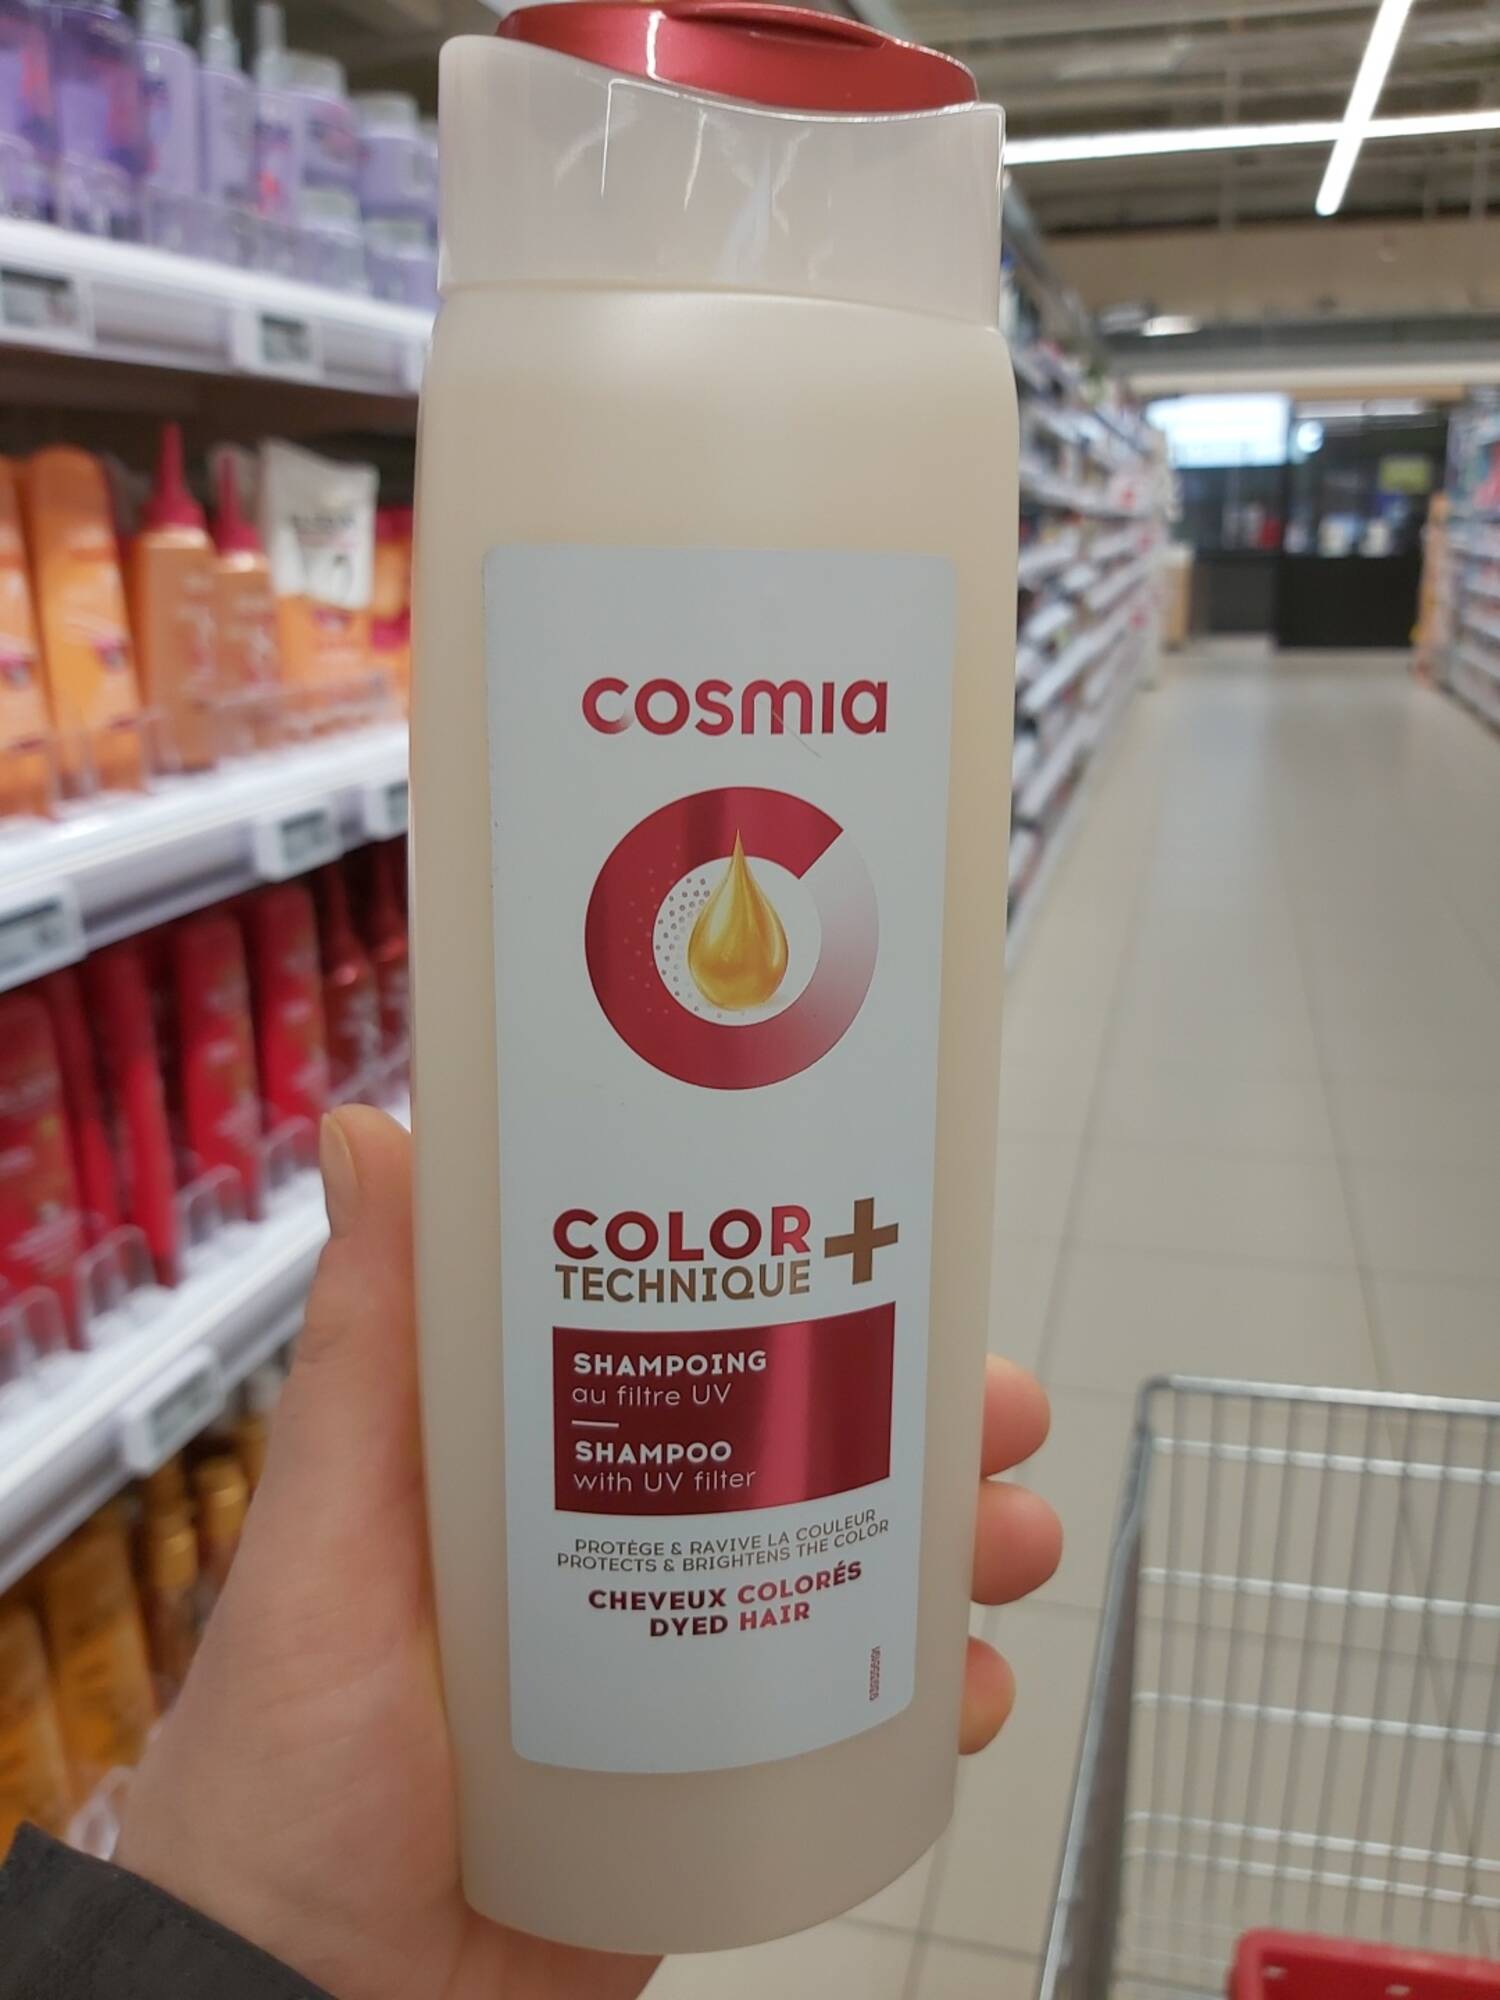 COSMIA - Color technique+ - Shampooing 